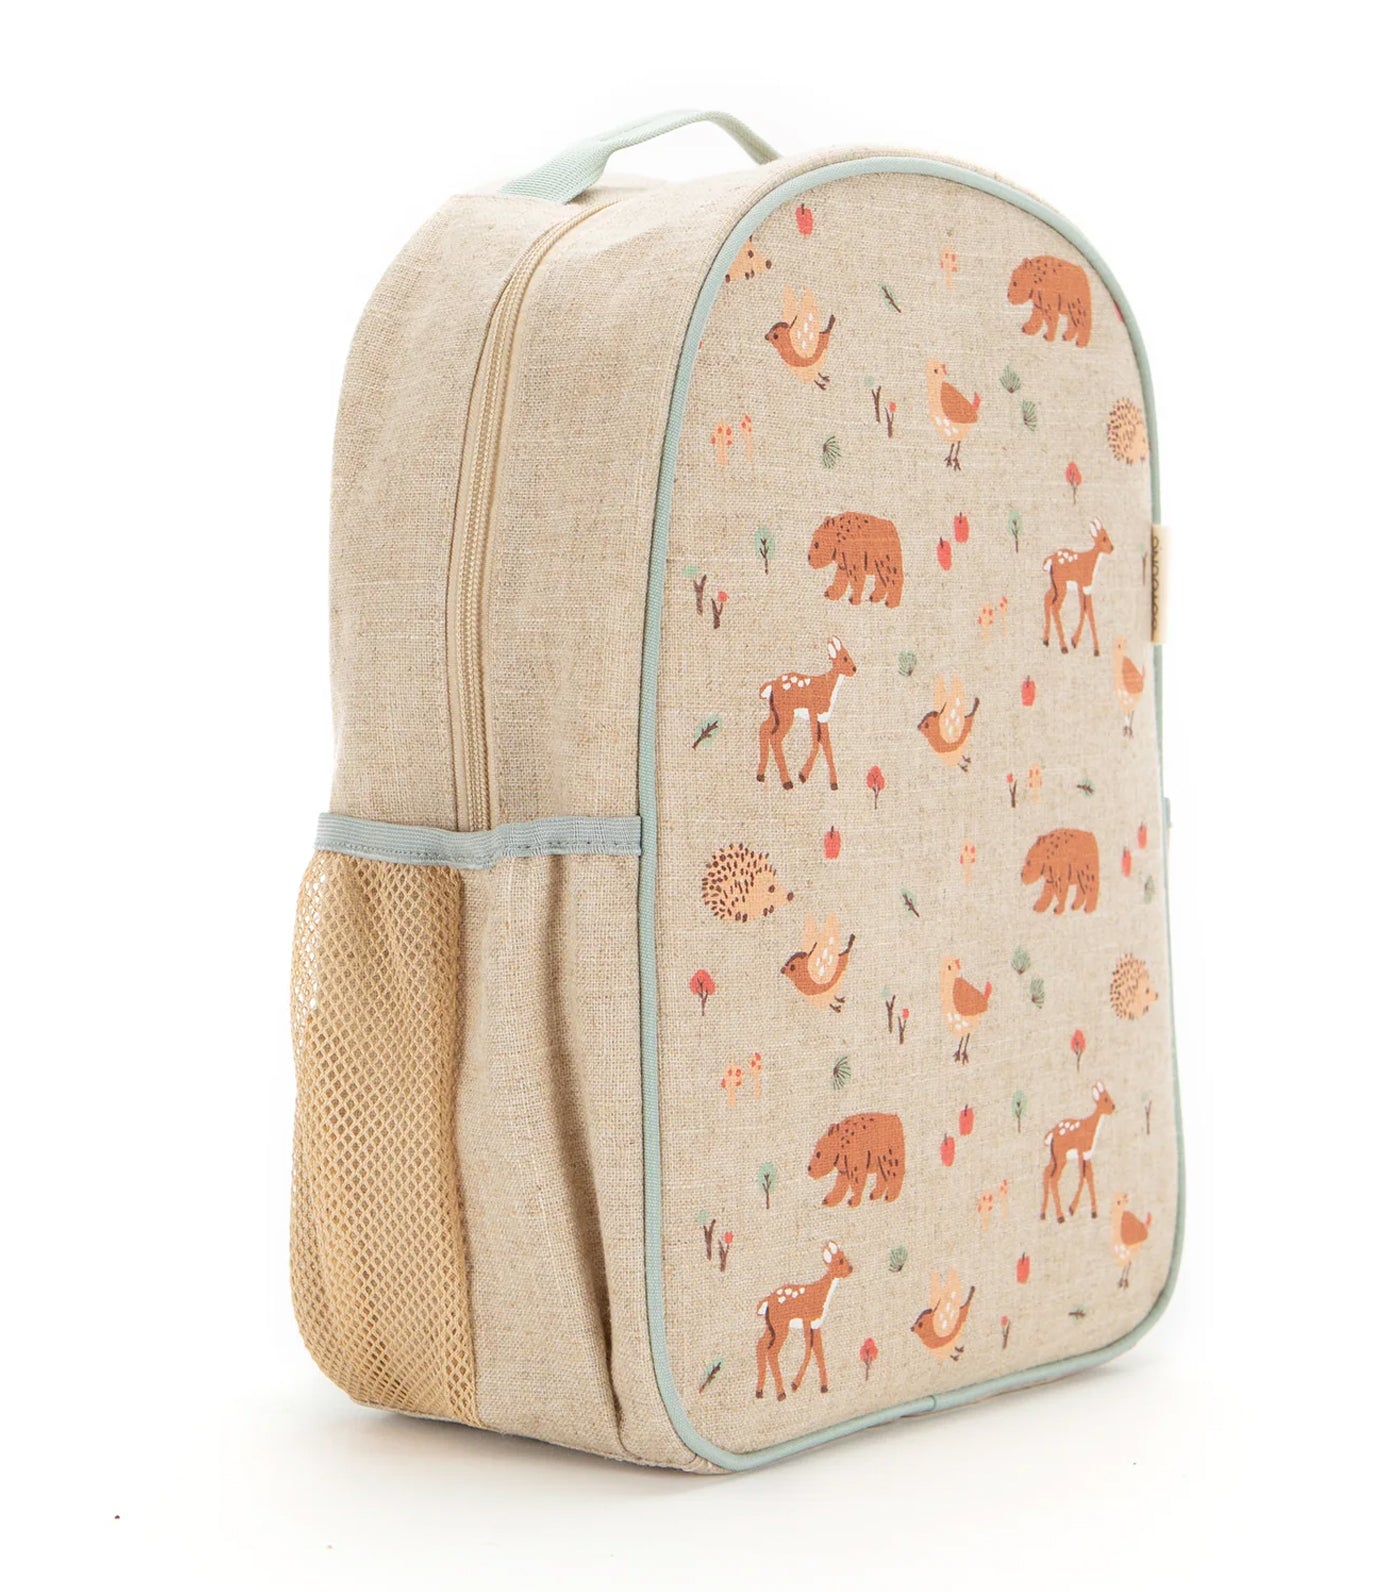 Toddler Backpack - Forest Friends